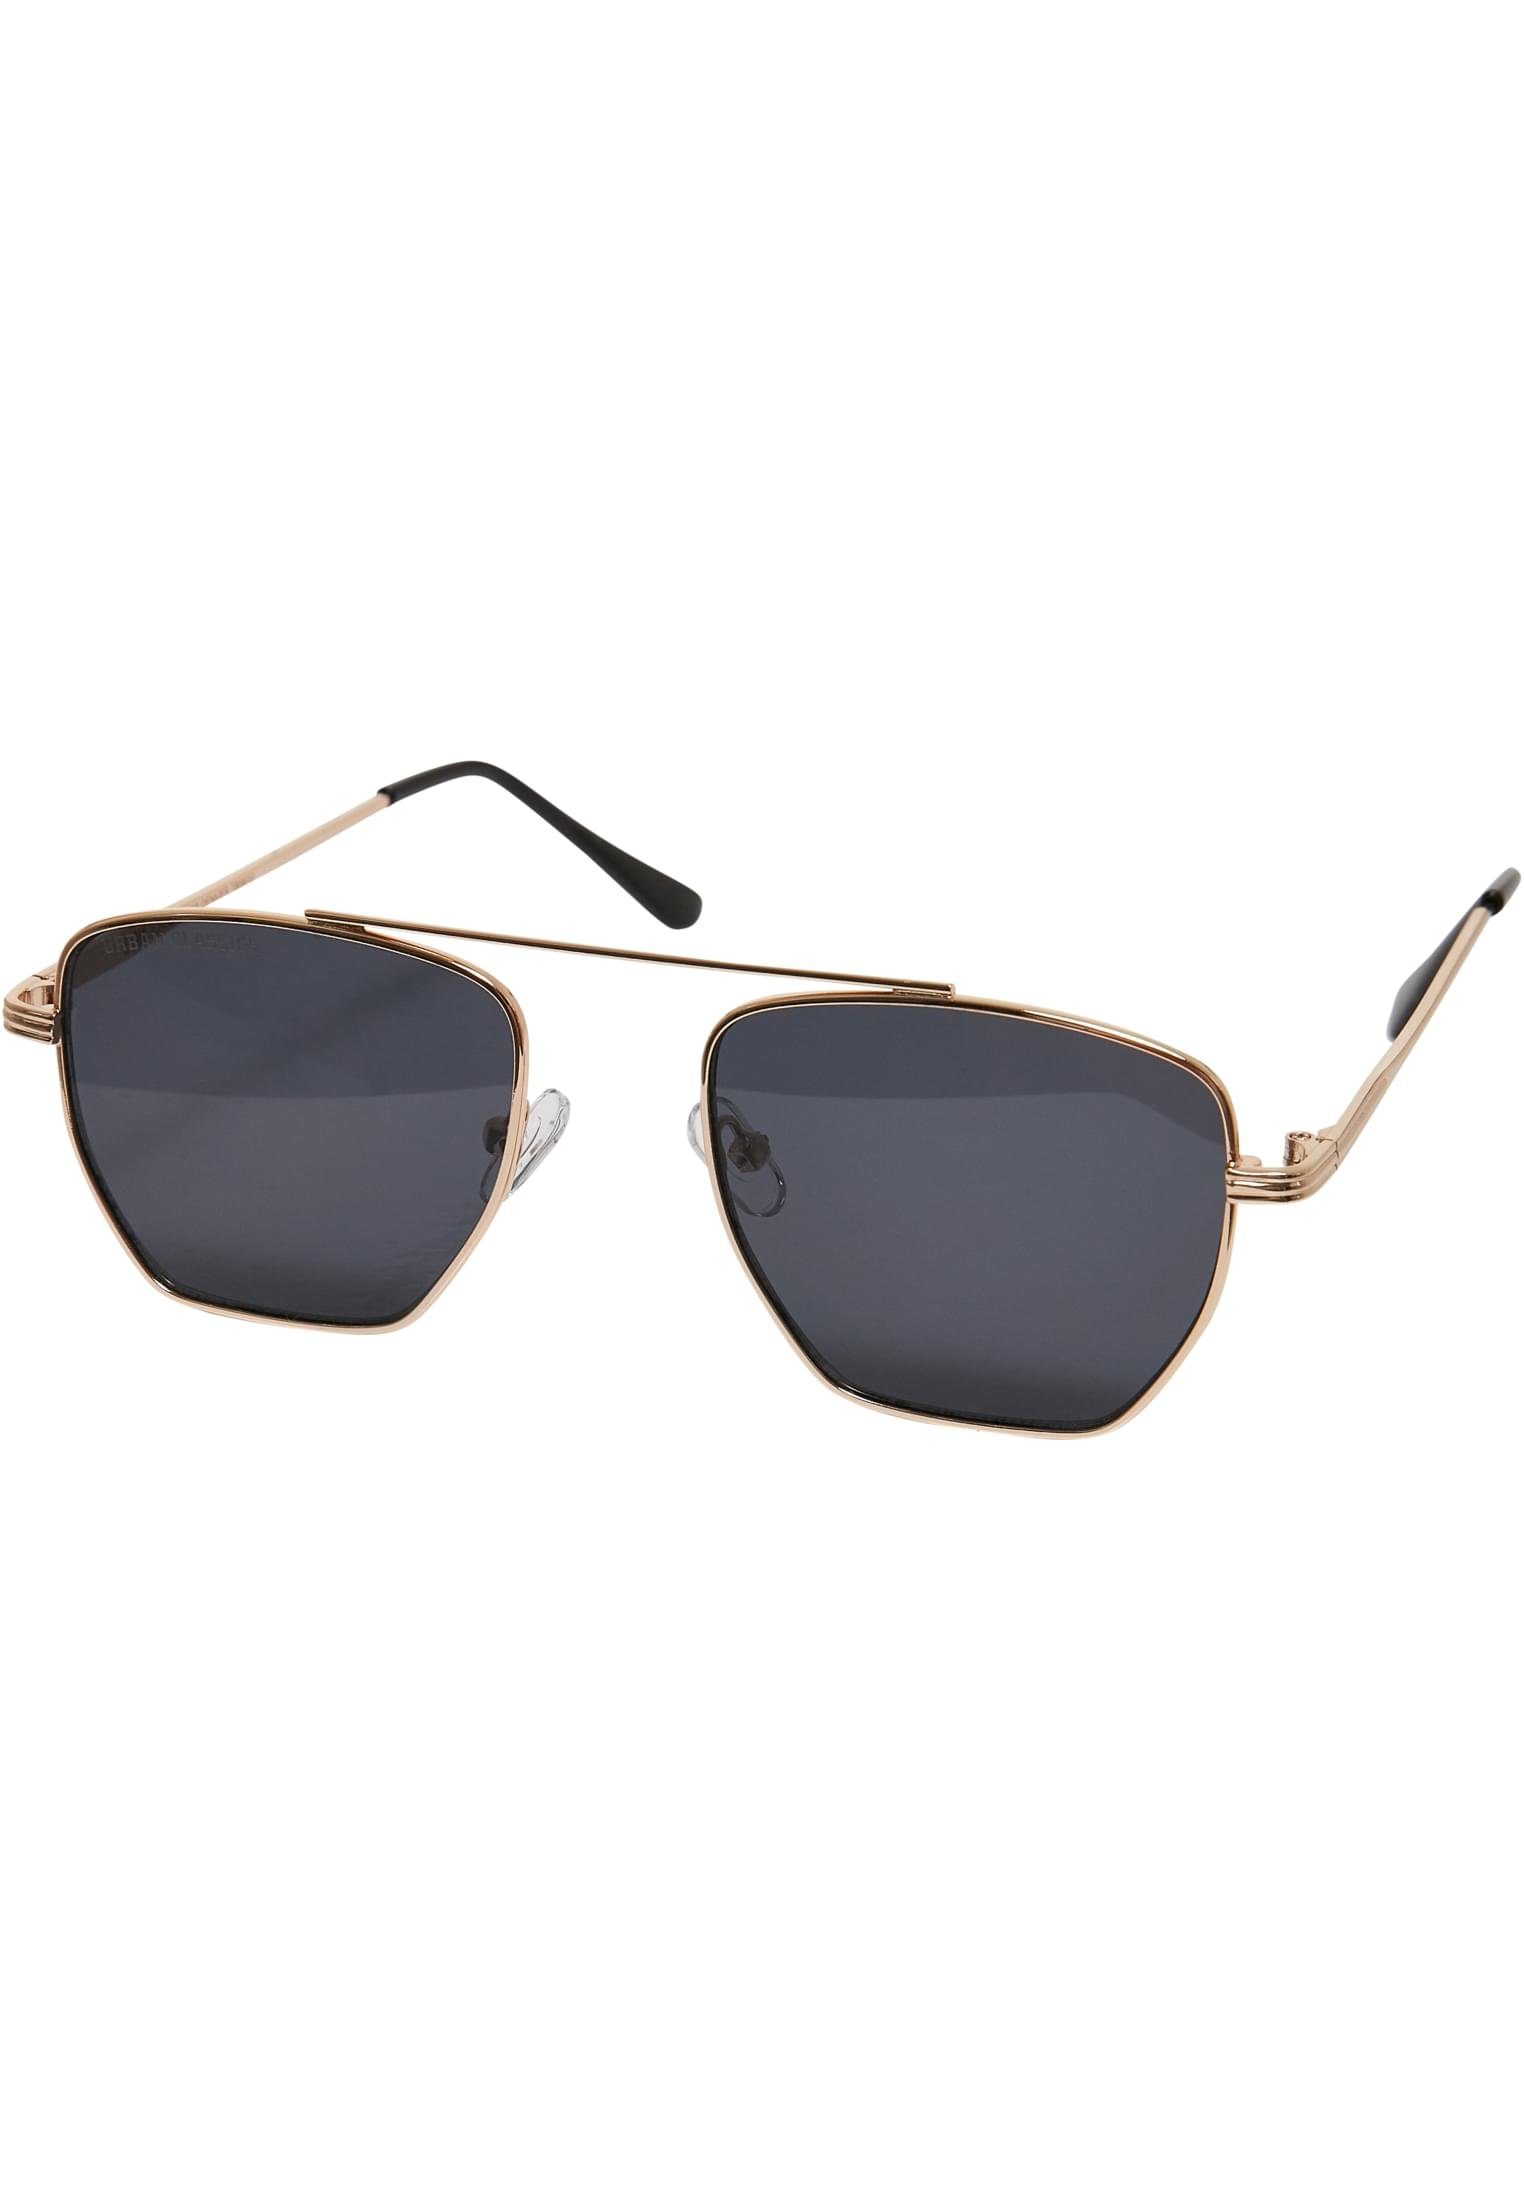 Denver Unisex URBAN Sonnenbrille black/gold CLASSICS Sunglasses